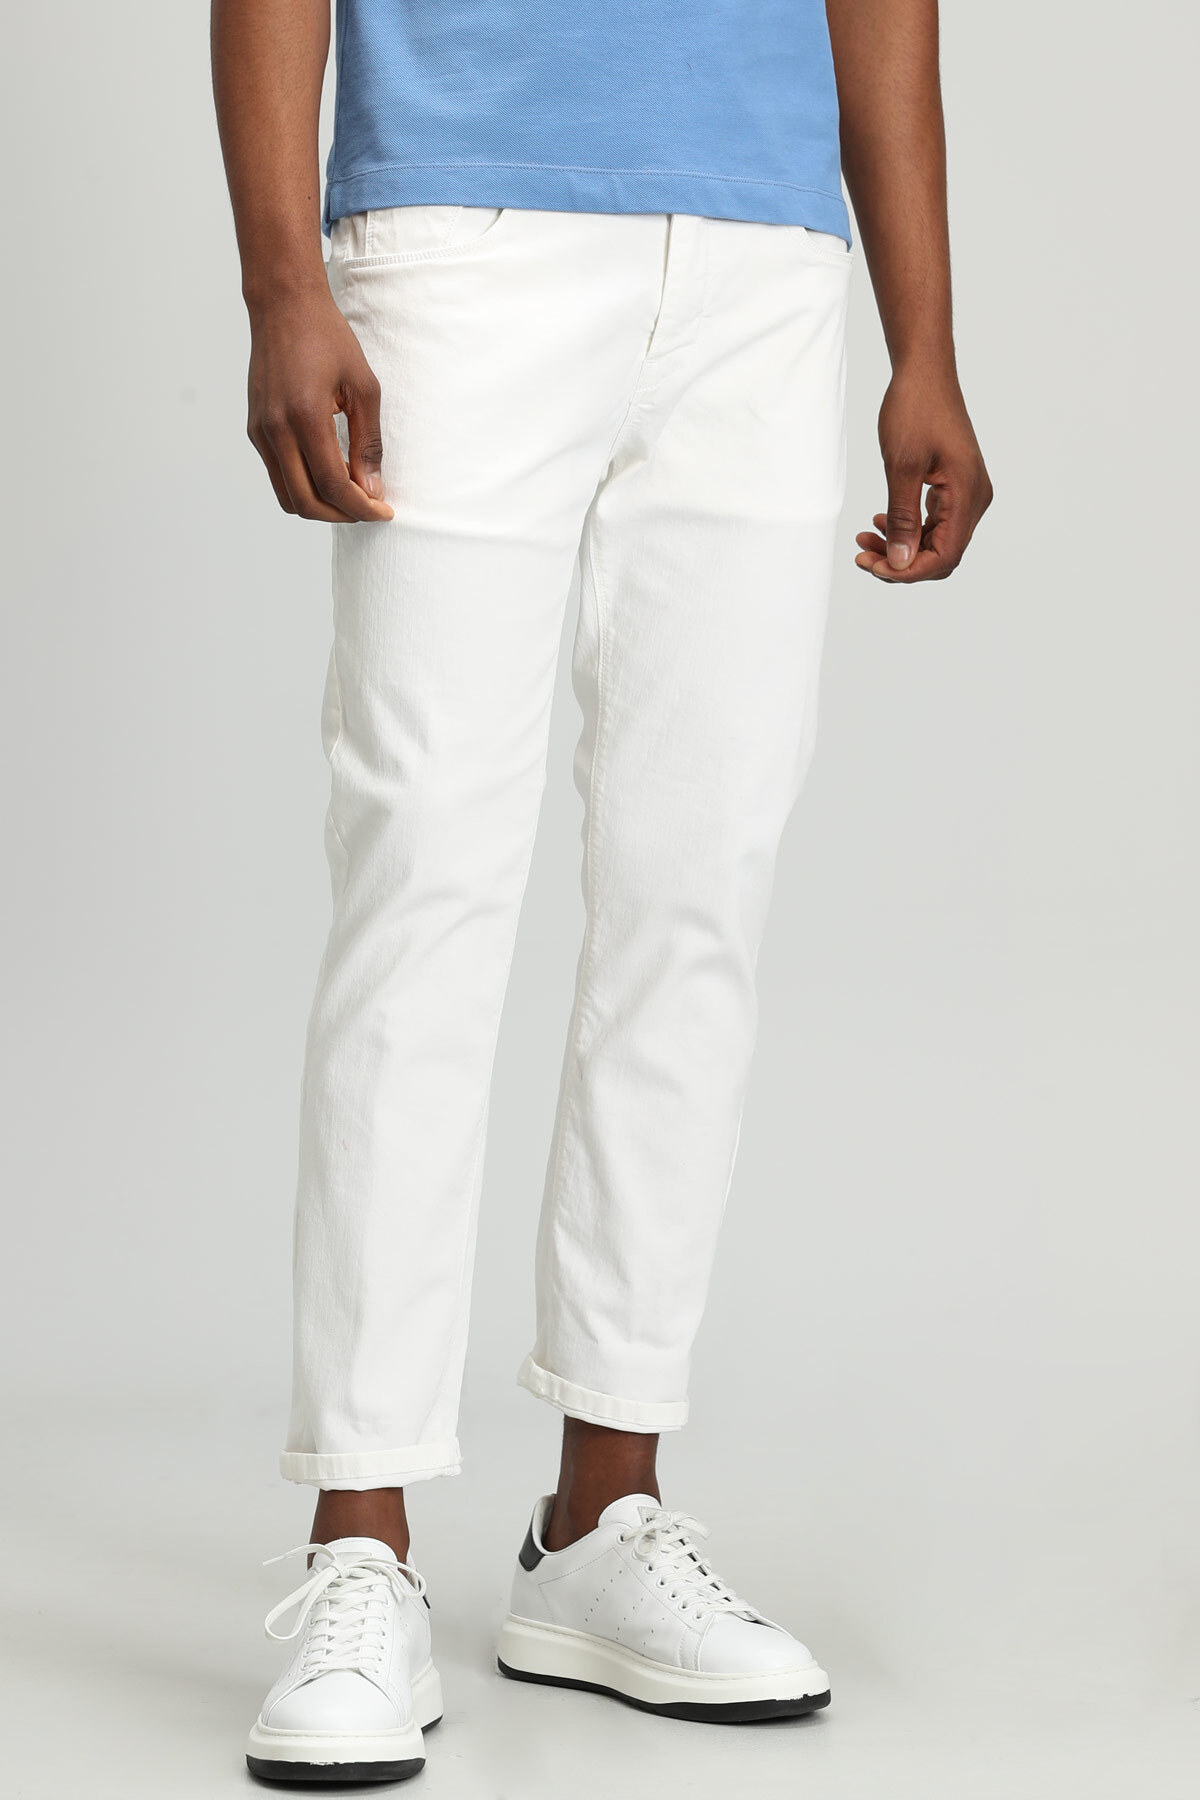 Aler Spor 5 Cep Erkek Pantolon Slim Fit Beyaz